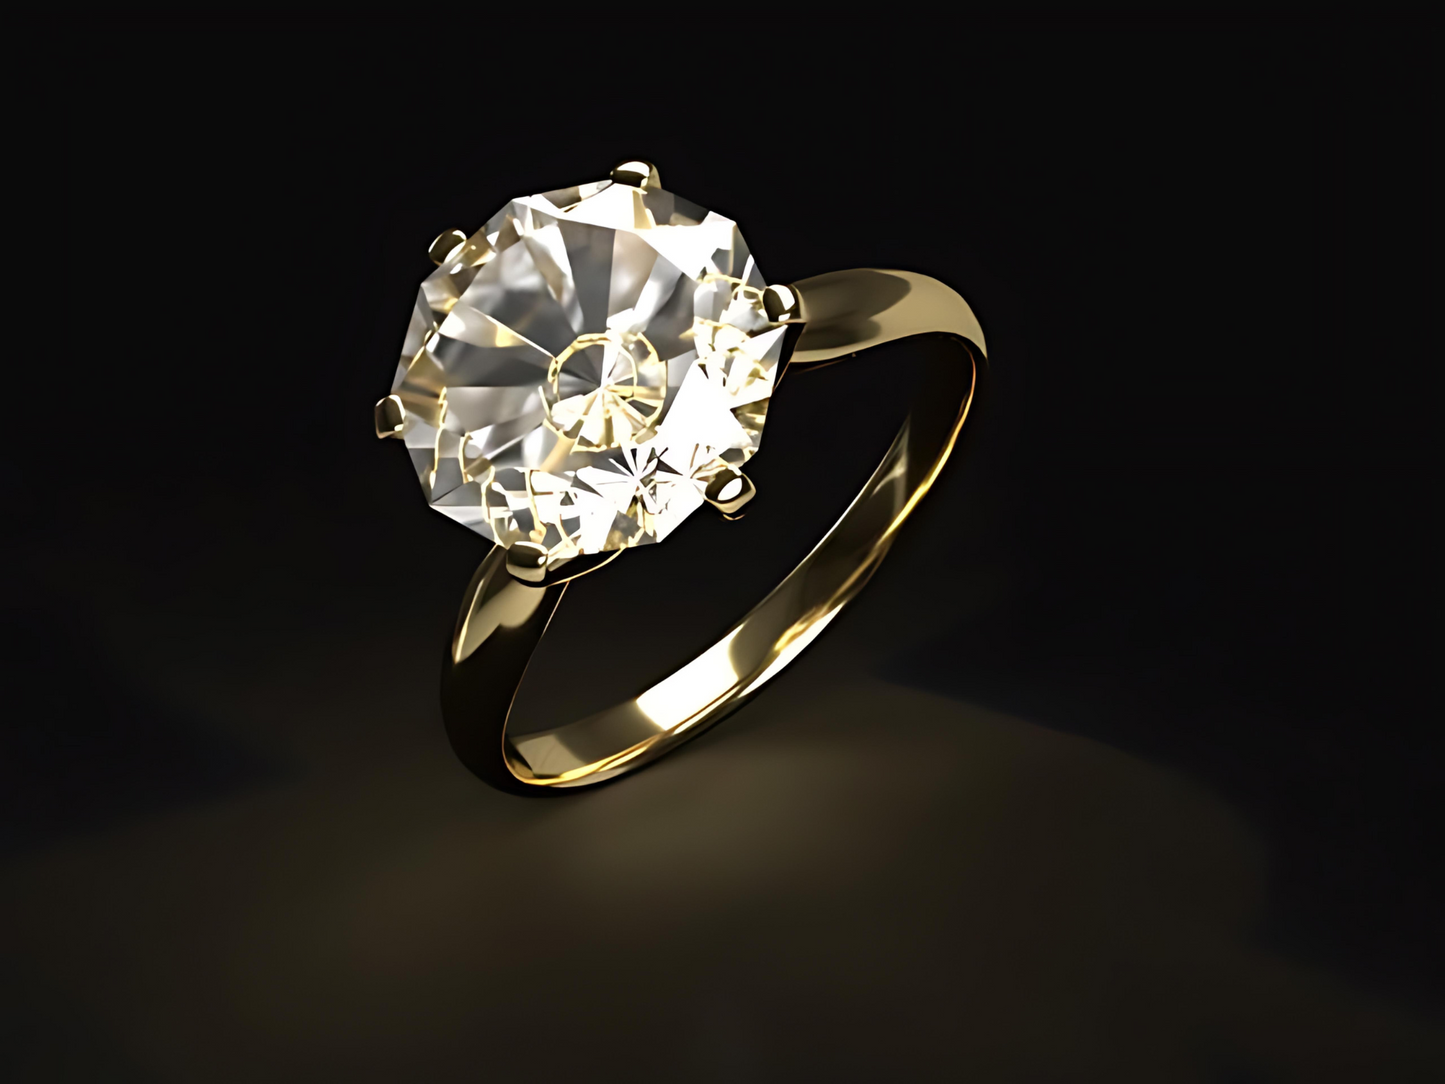 Handmade 14K gold ring with natural Vs high quality Diamond. IGI certificate.